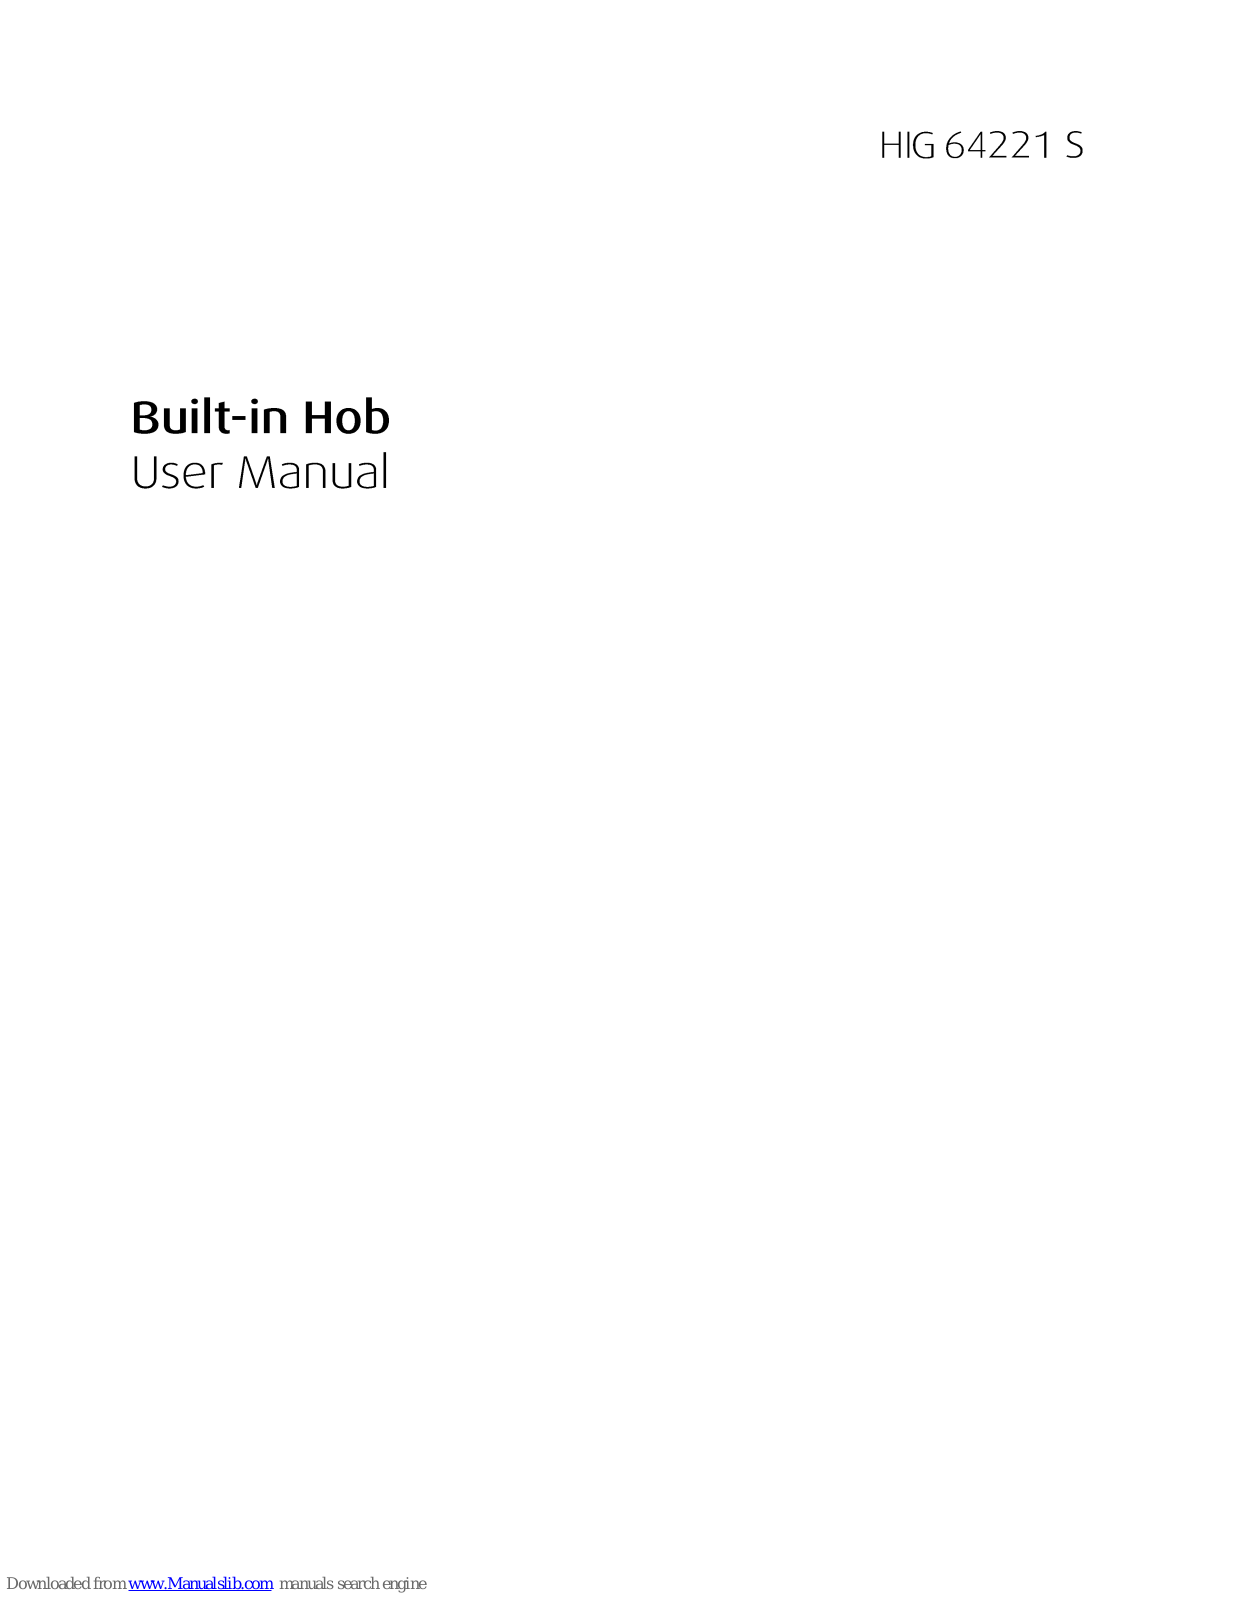 Beko HIG 64221 S User Manual